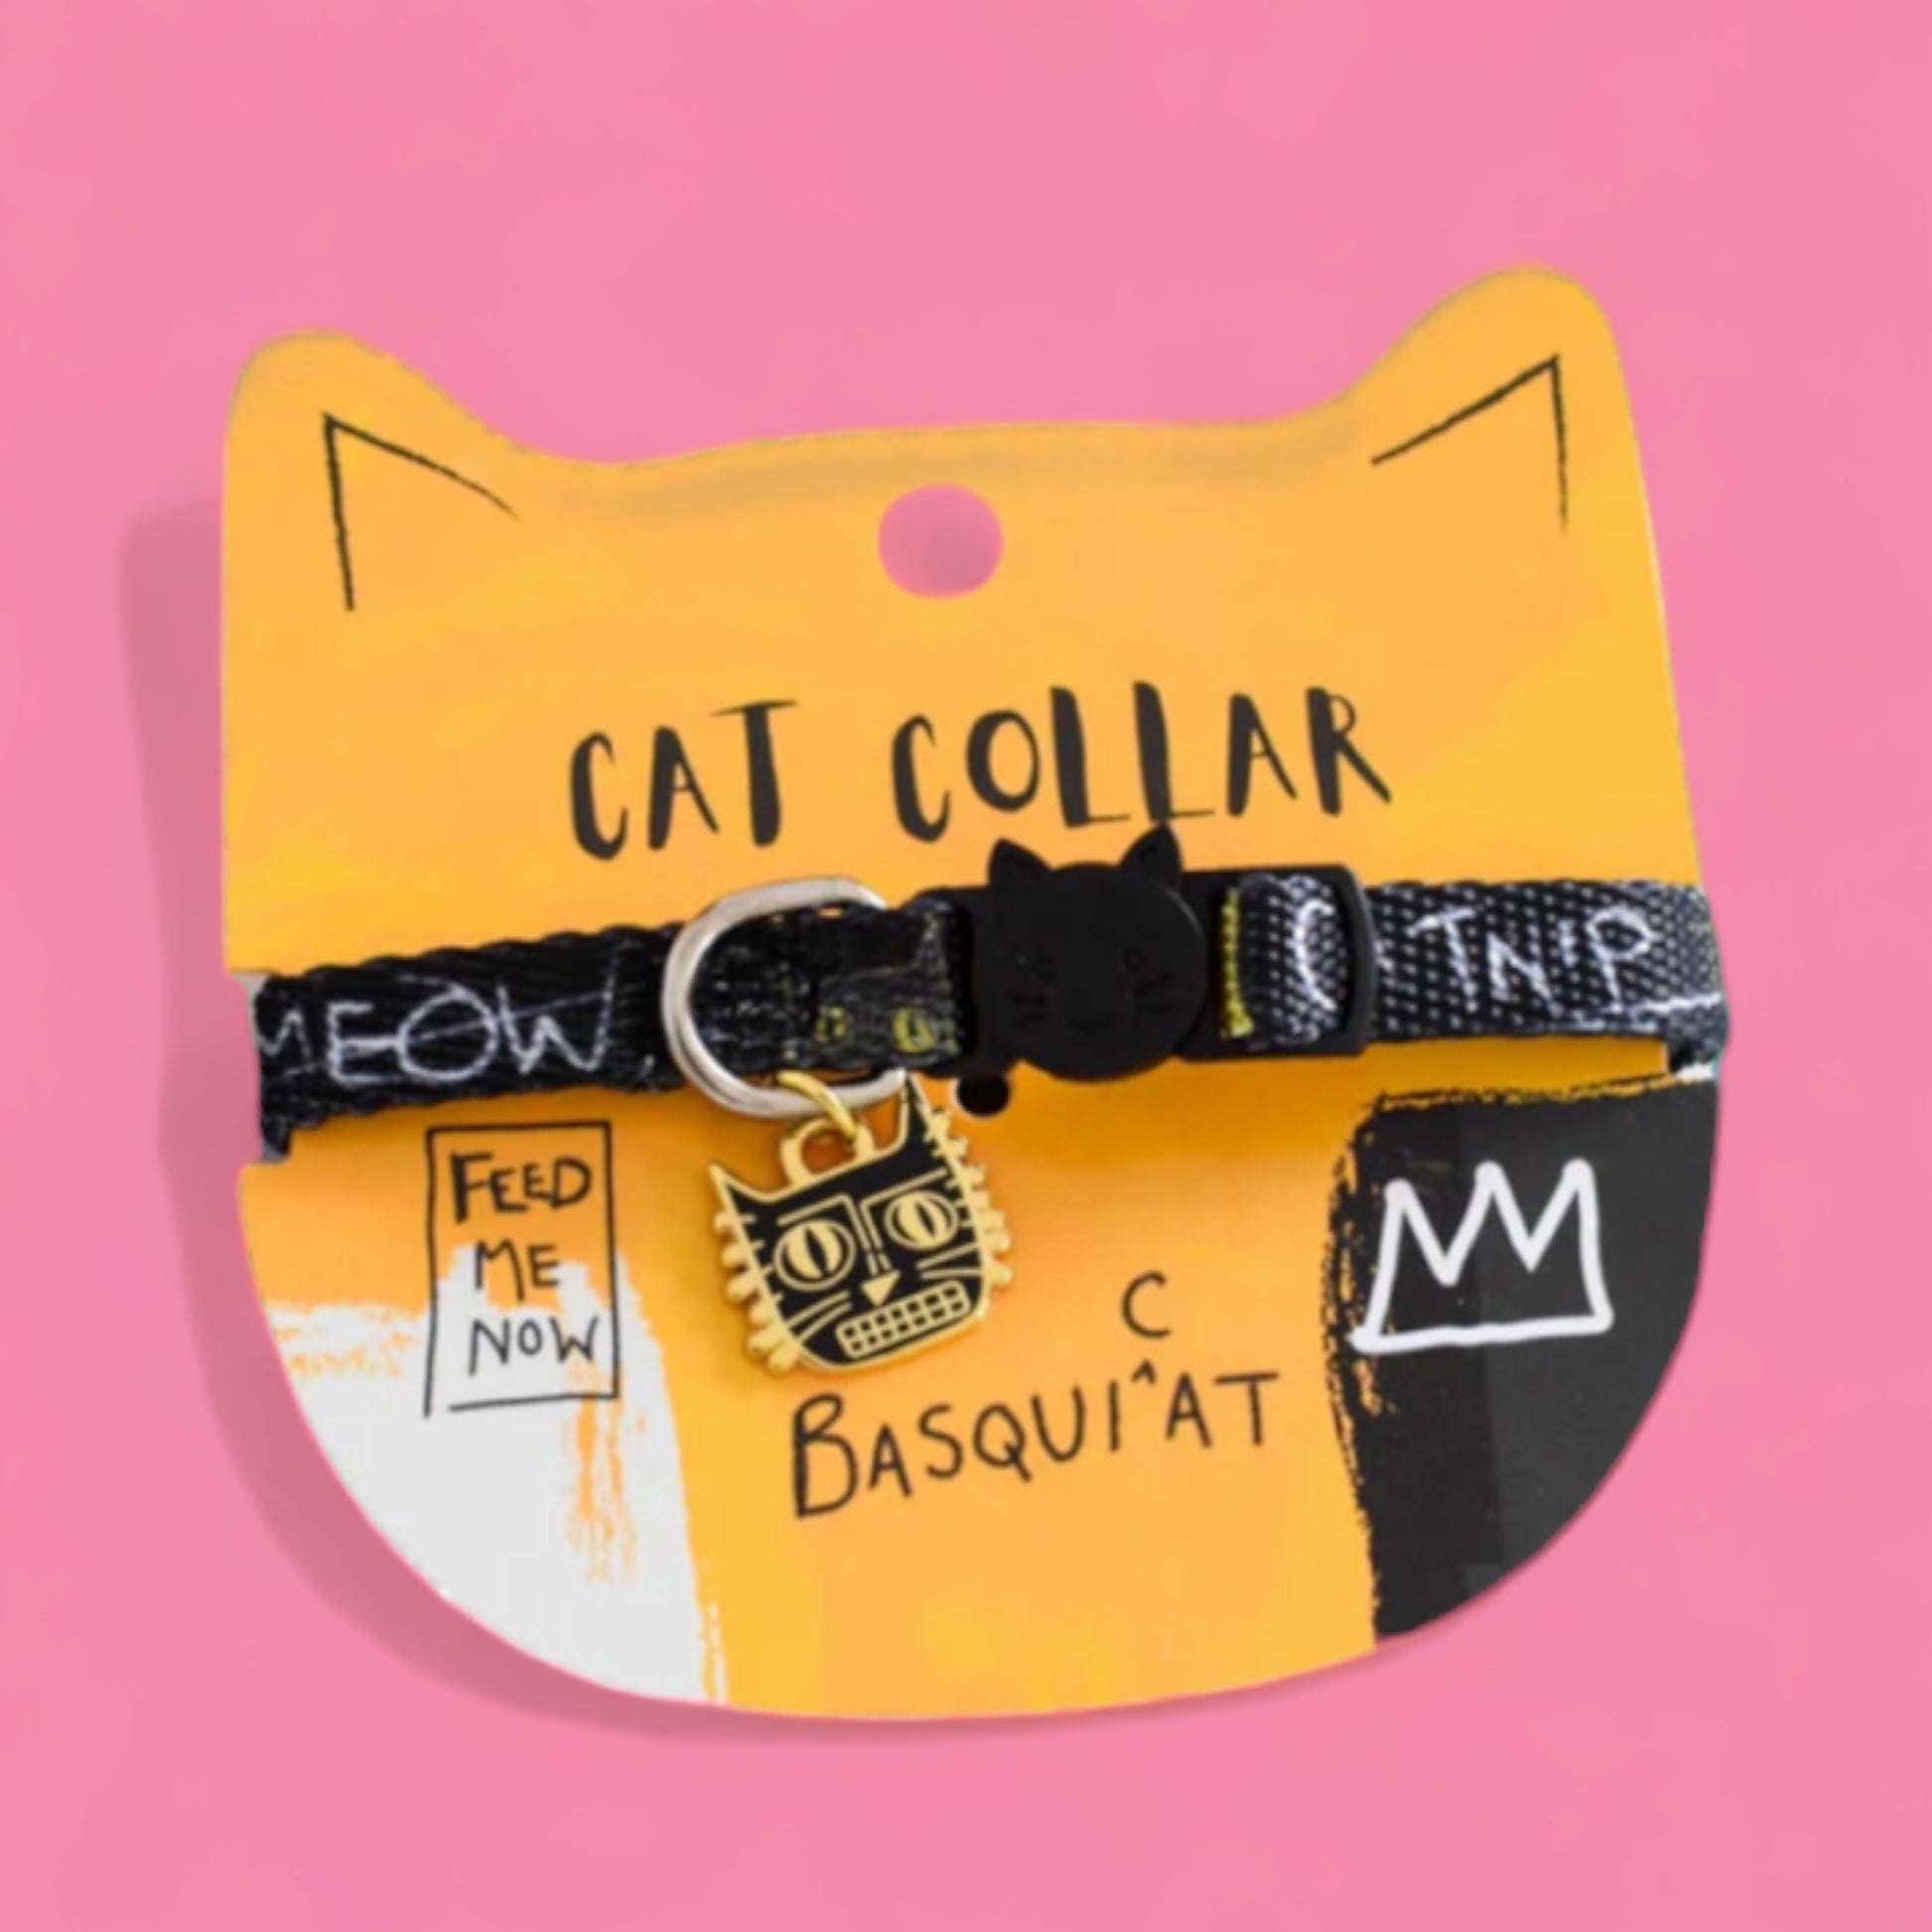 BasquiCAT Cat Collar - Hella Kitsch